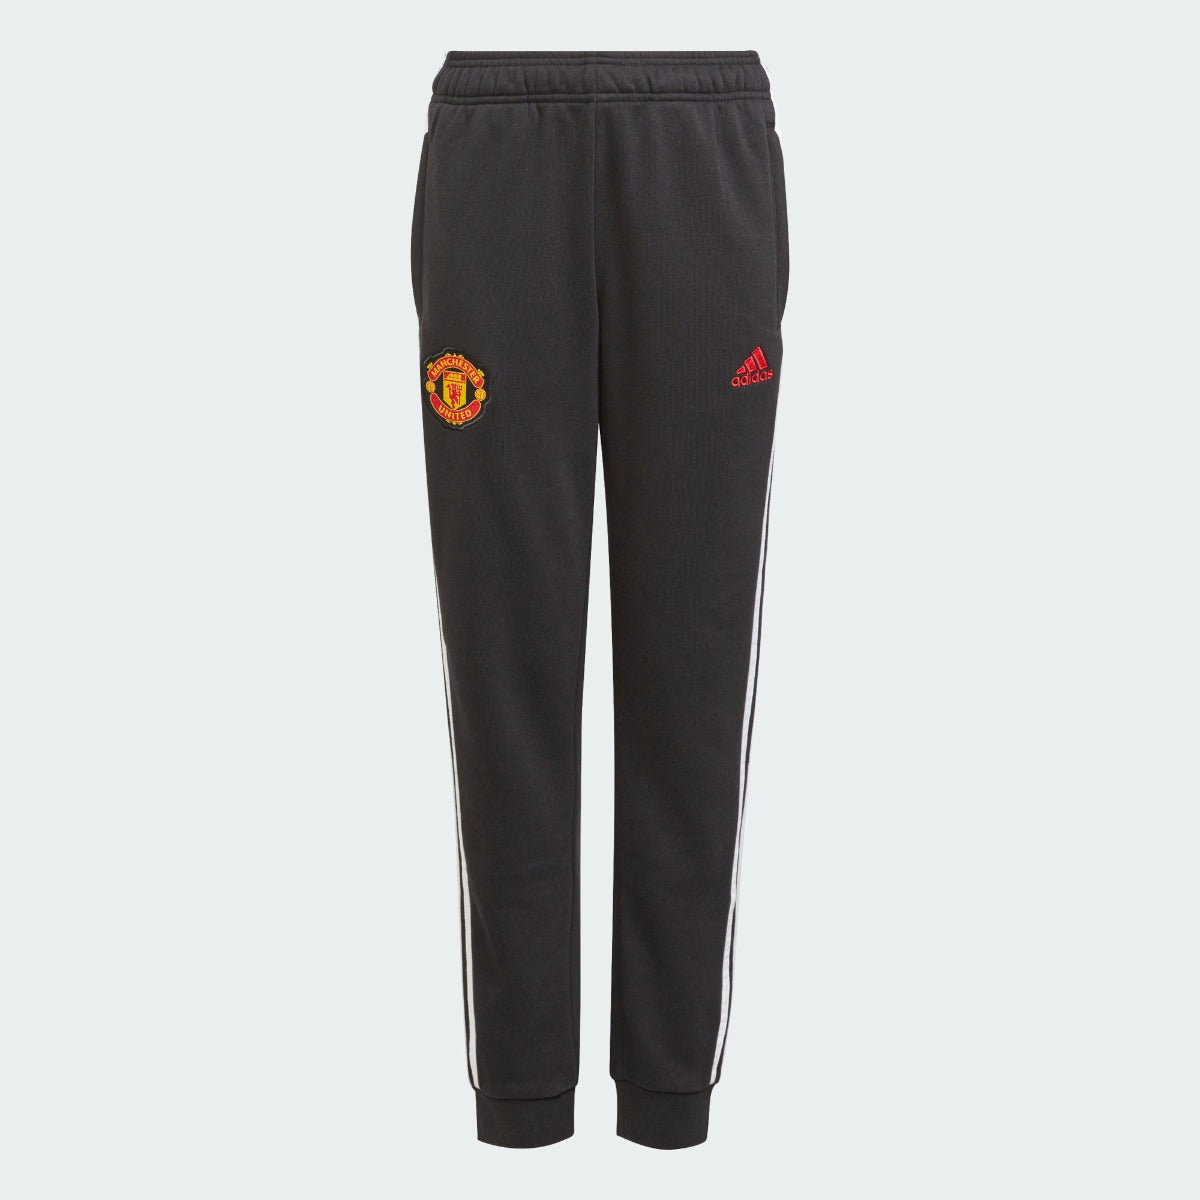 Adidas 2021-22 Manchester United Kids Sweatpants - Black-White (Front)